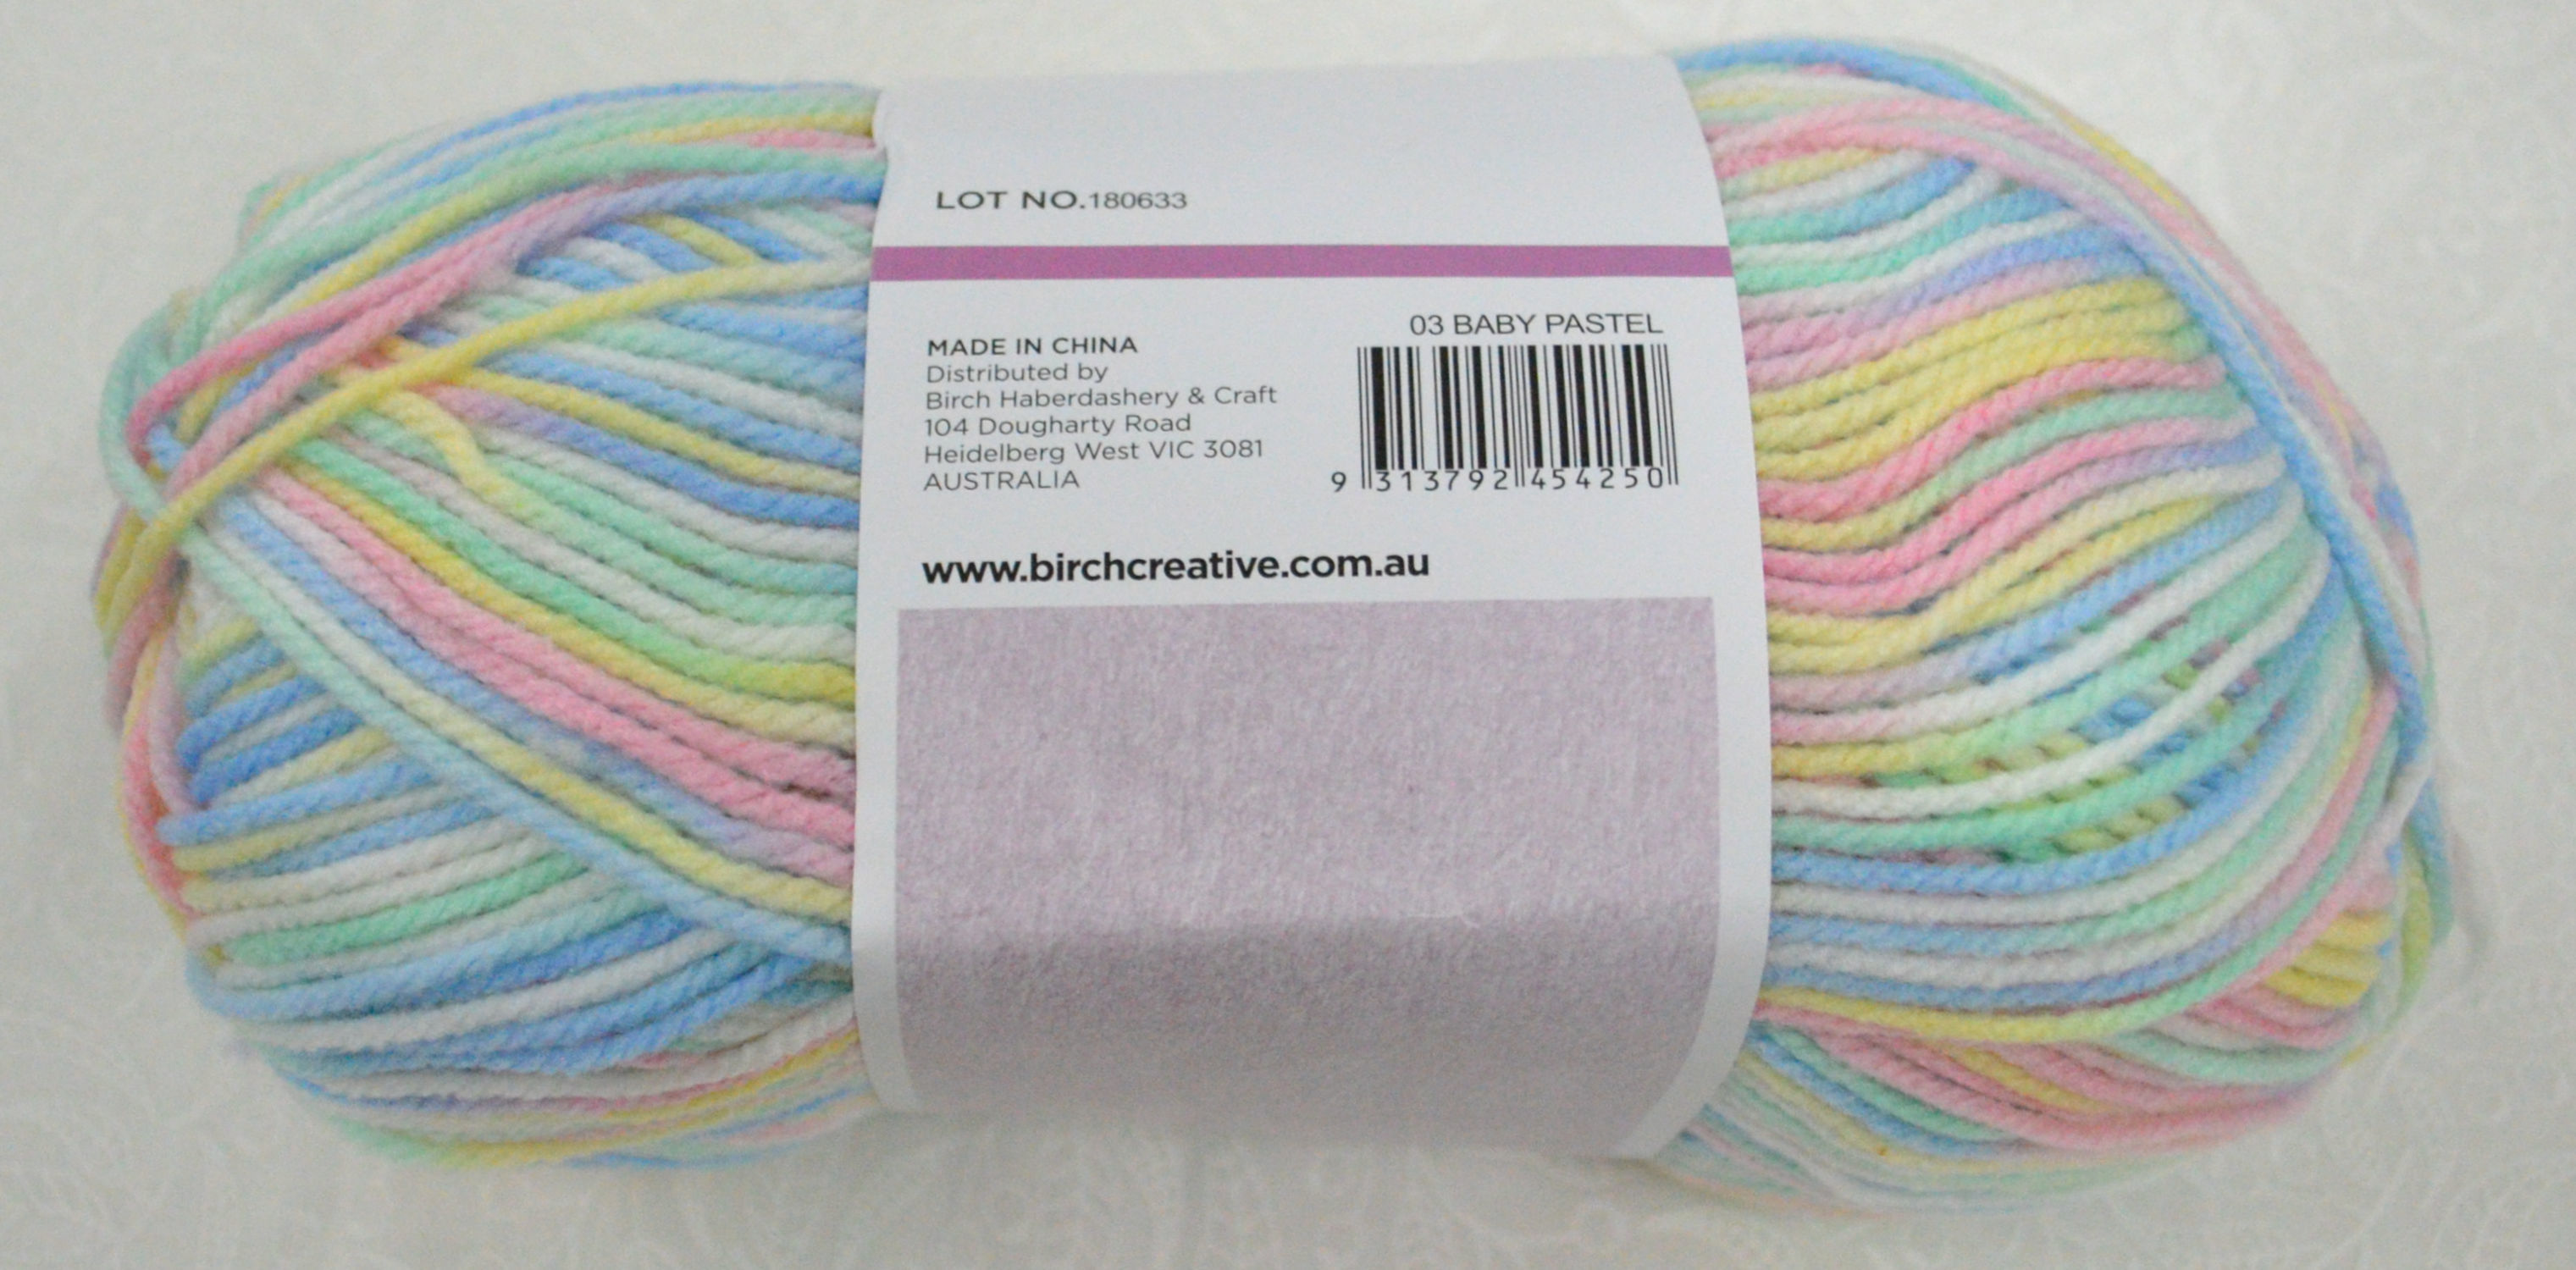 Birch Creative 100% Acrylic Knitting Yarn, 8 Ply, 100g 